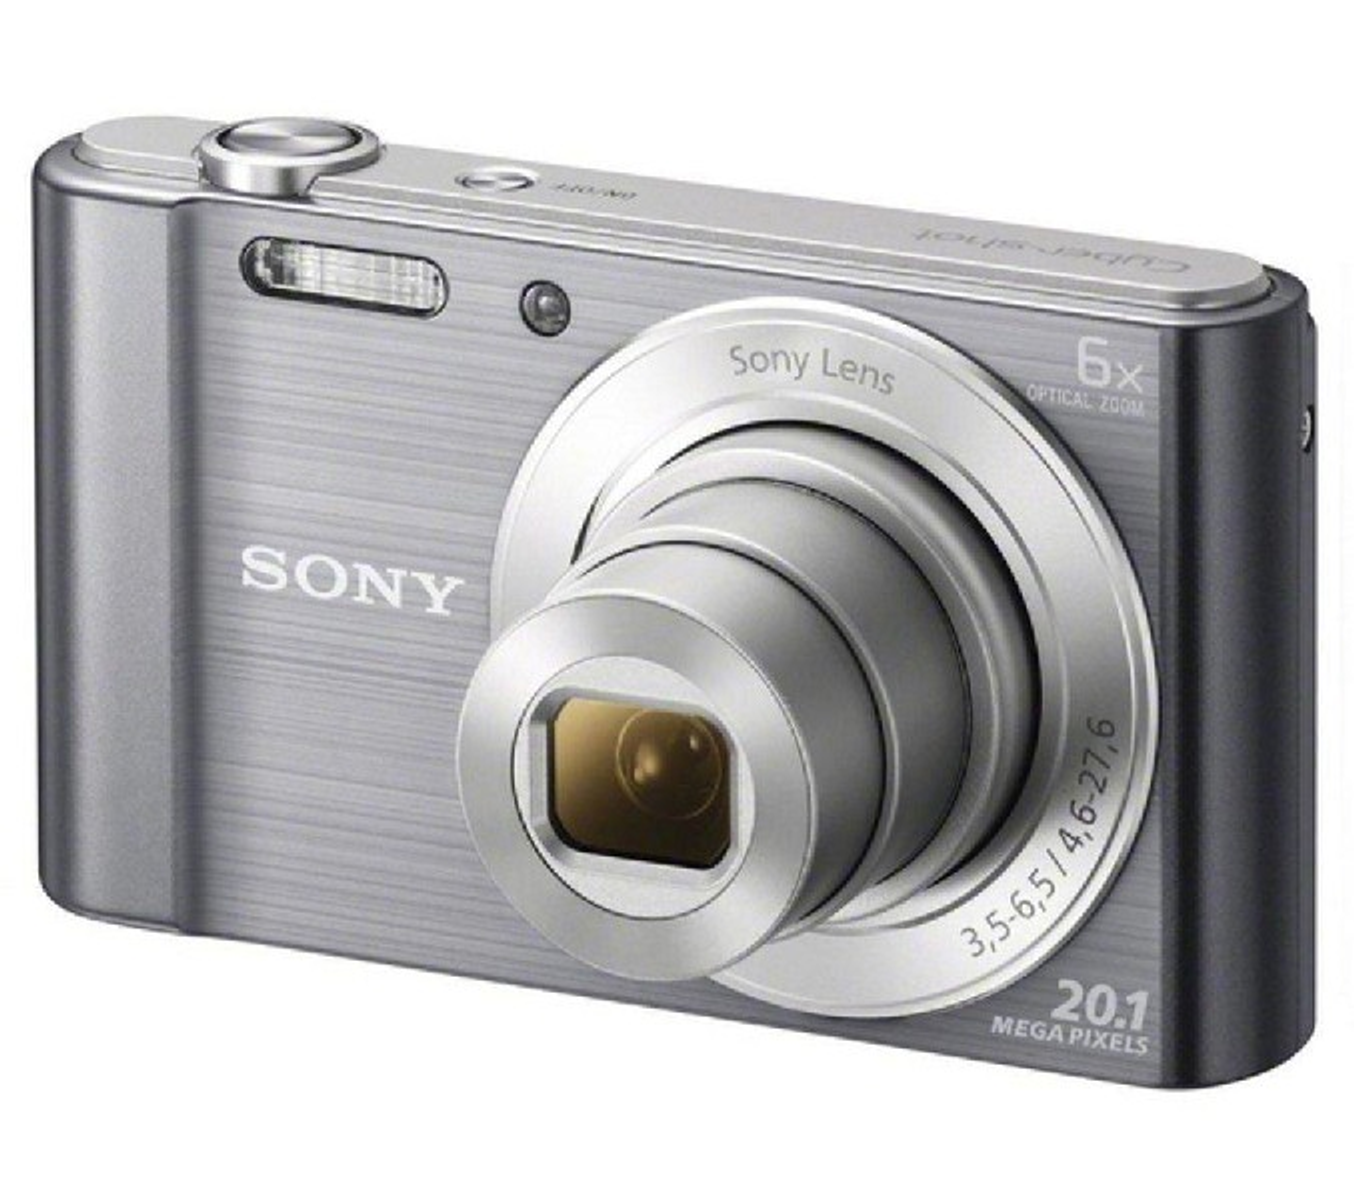 6x opt. 810 Digitalkamera Silber, SILBER DSC-W TFT-LCD SONY Zoom,